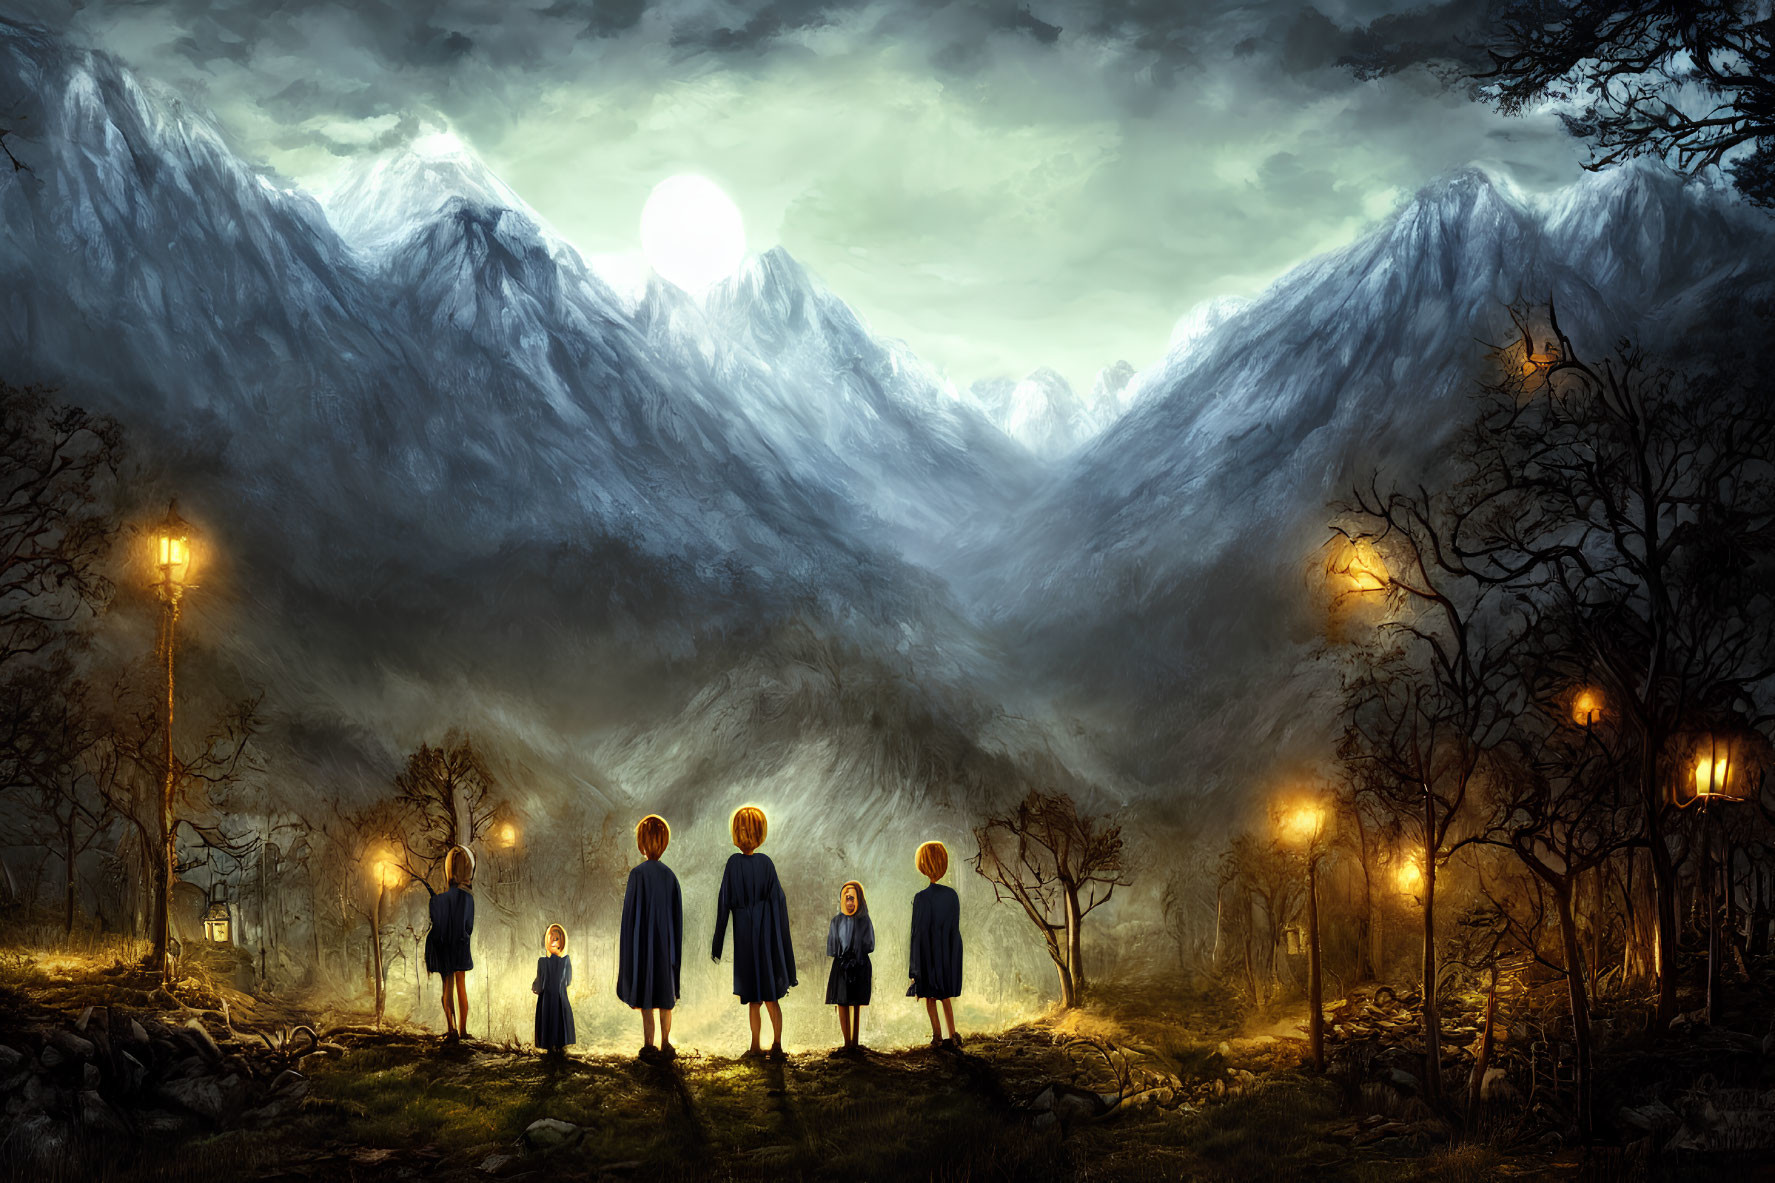 Children under full moon in mystical mountain landscape.